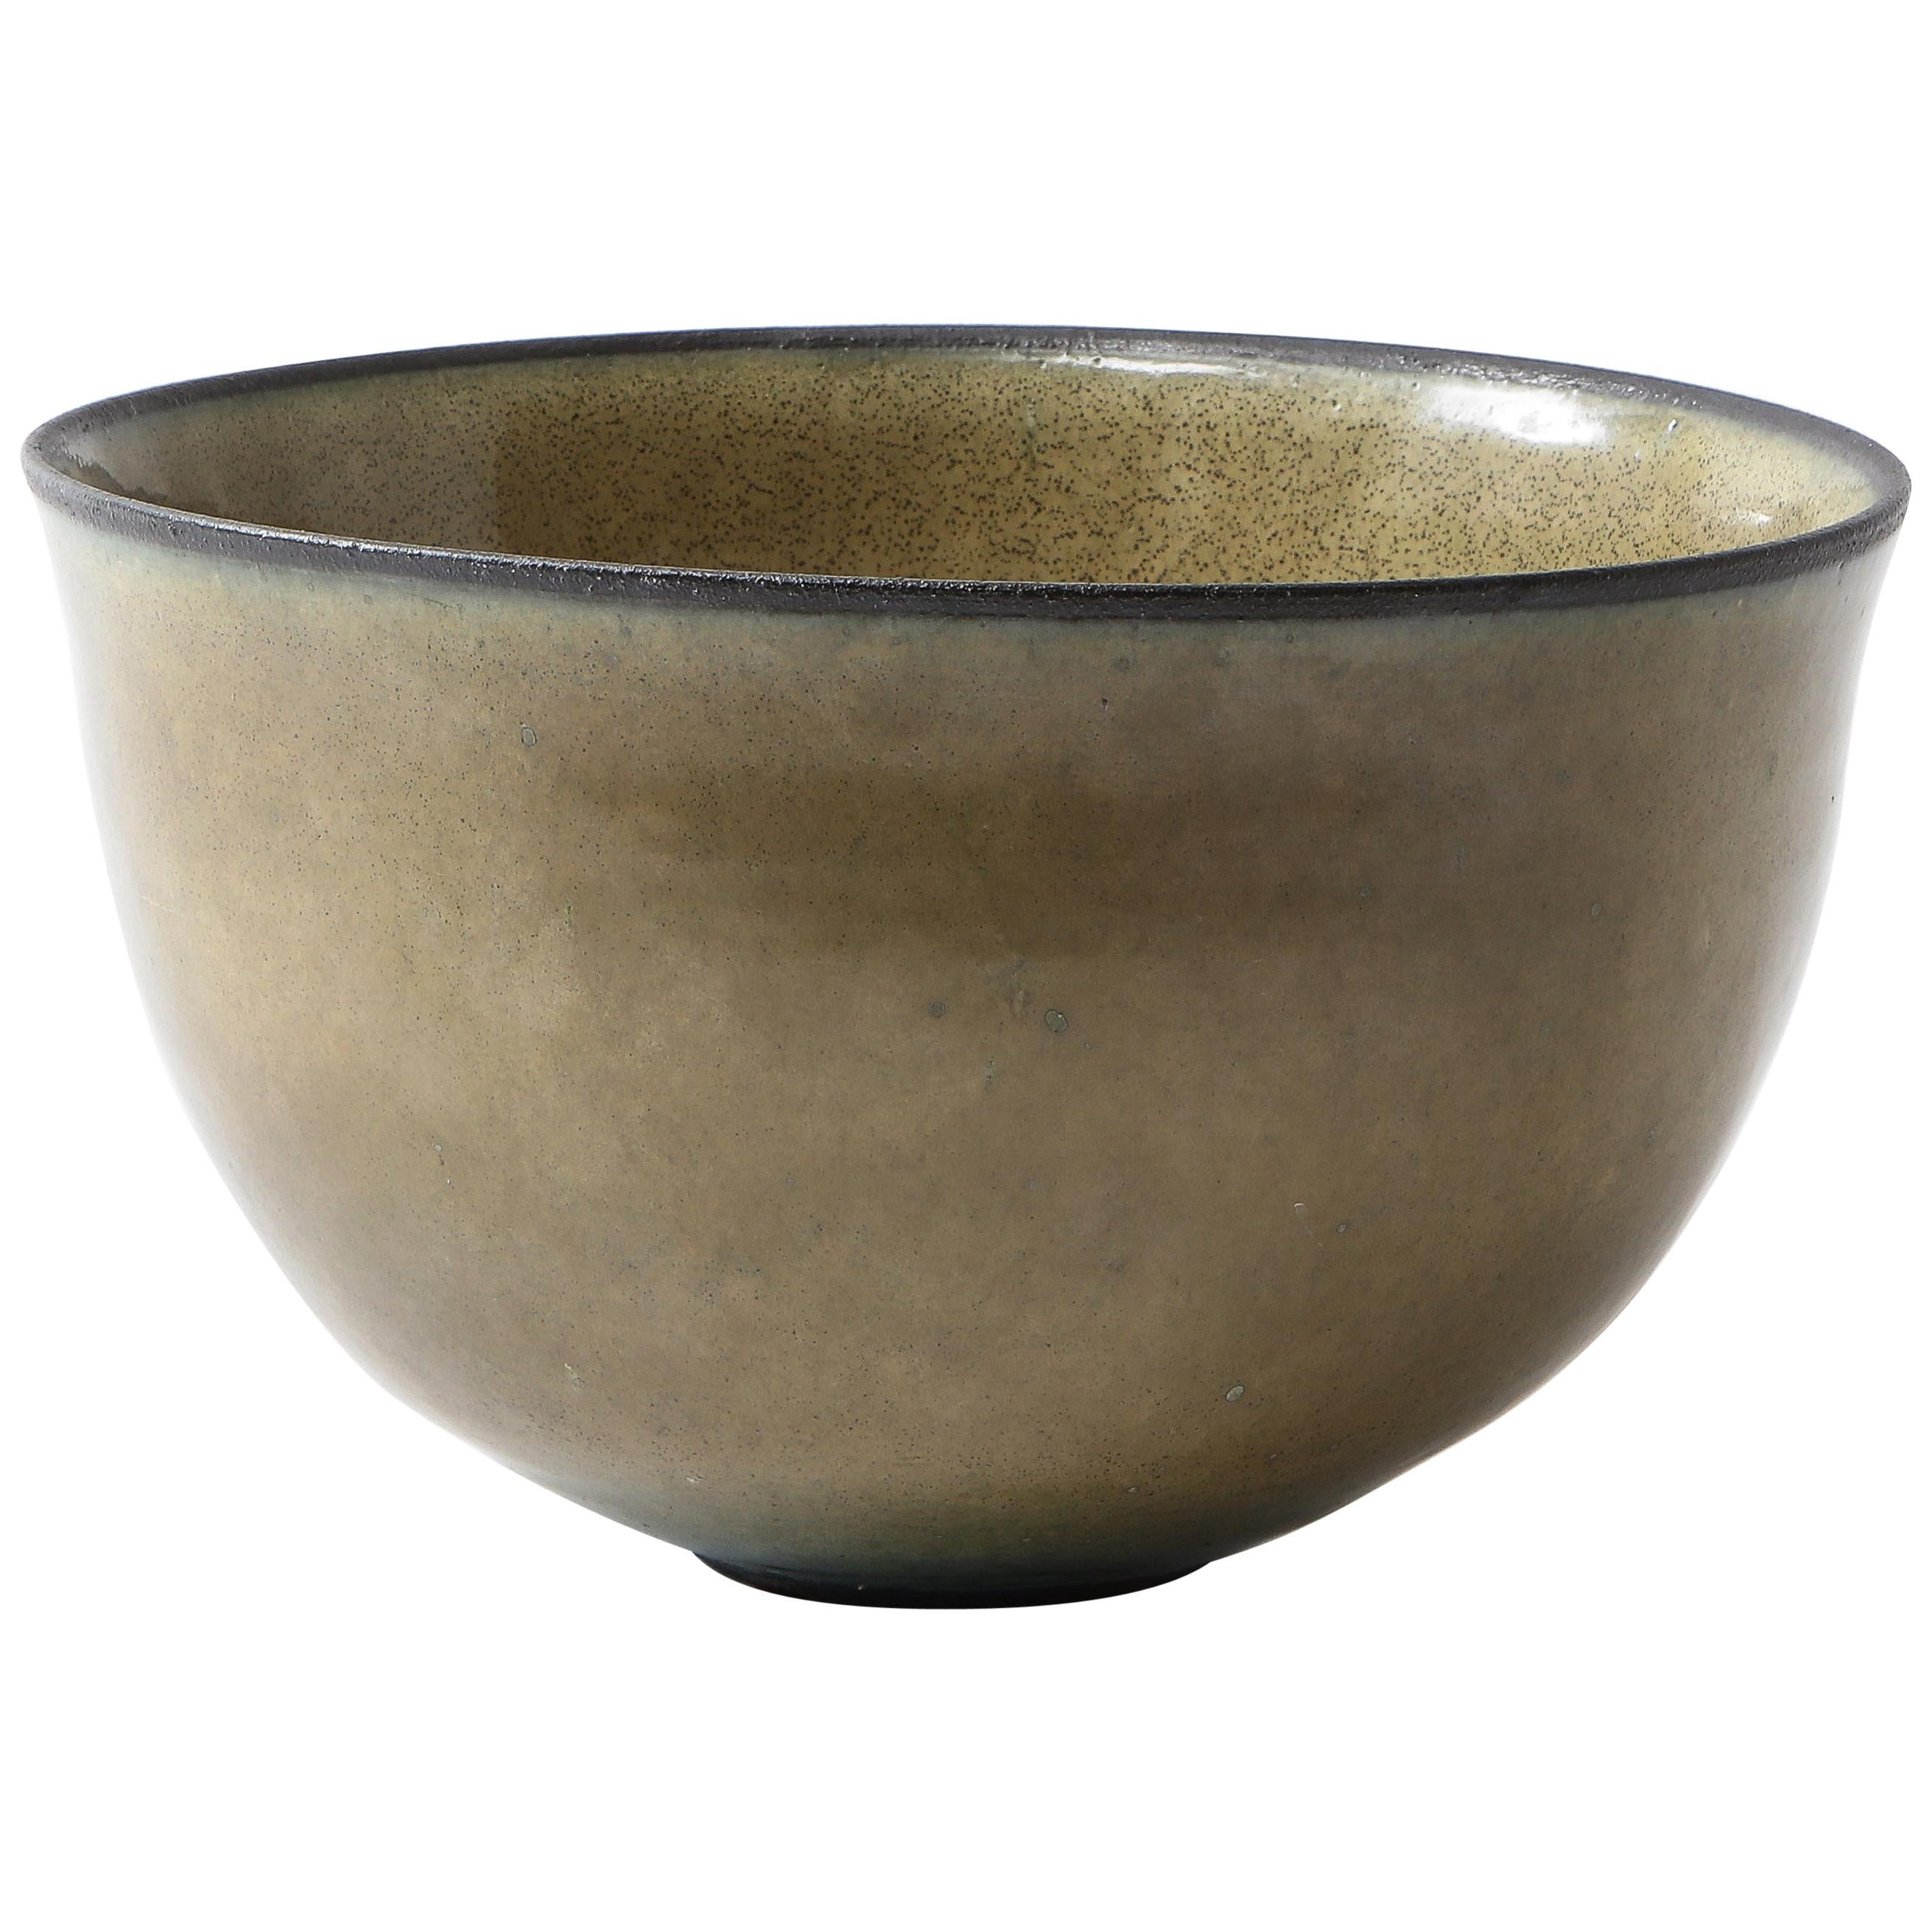 Michael Breum Ceramic Bowl, Dark Mustard with Black Lip, Signed, Denmark 1960's